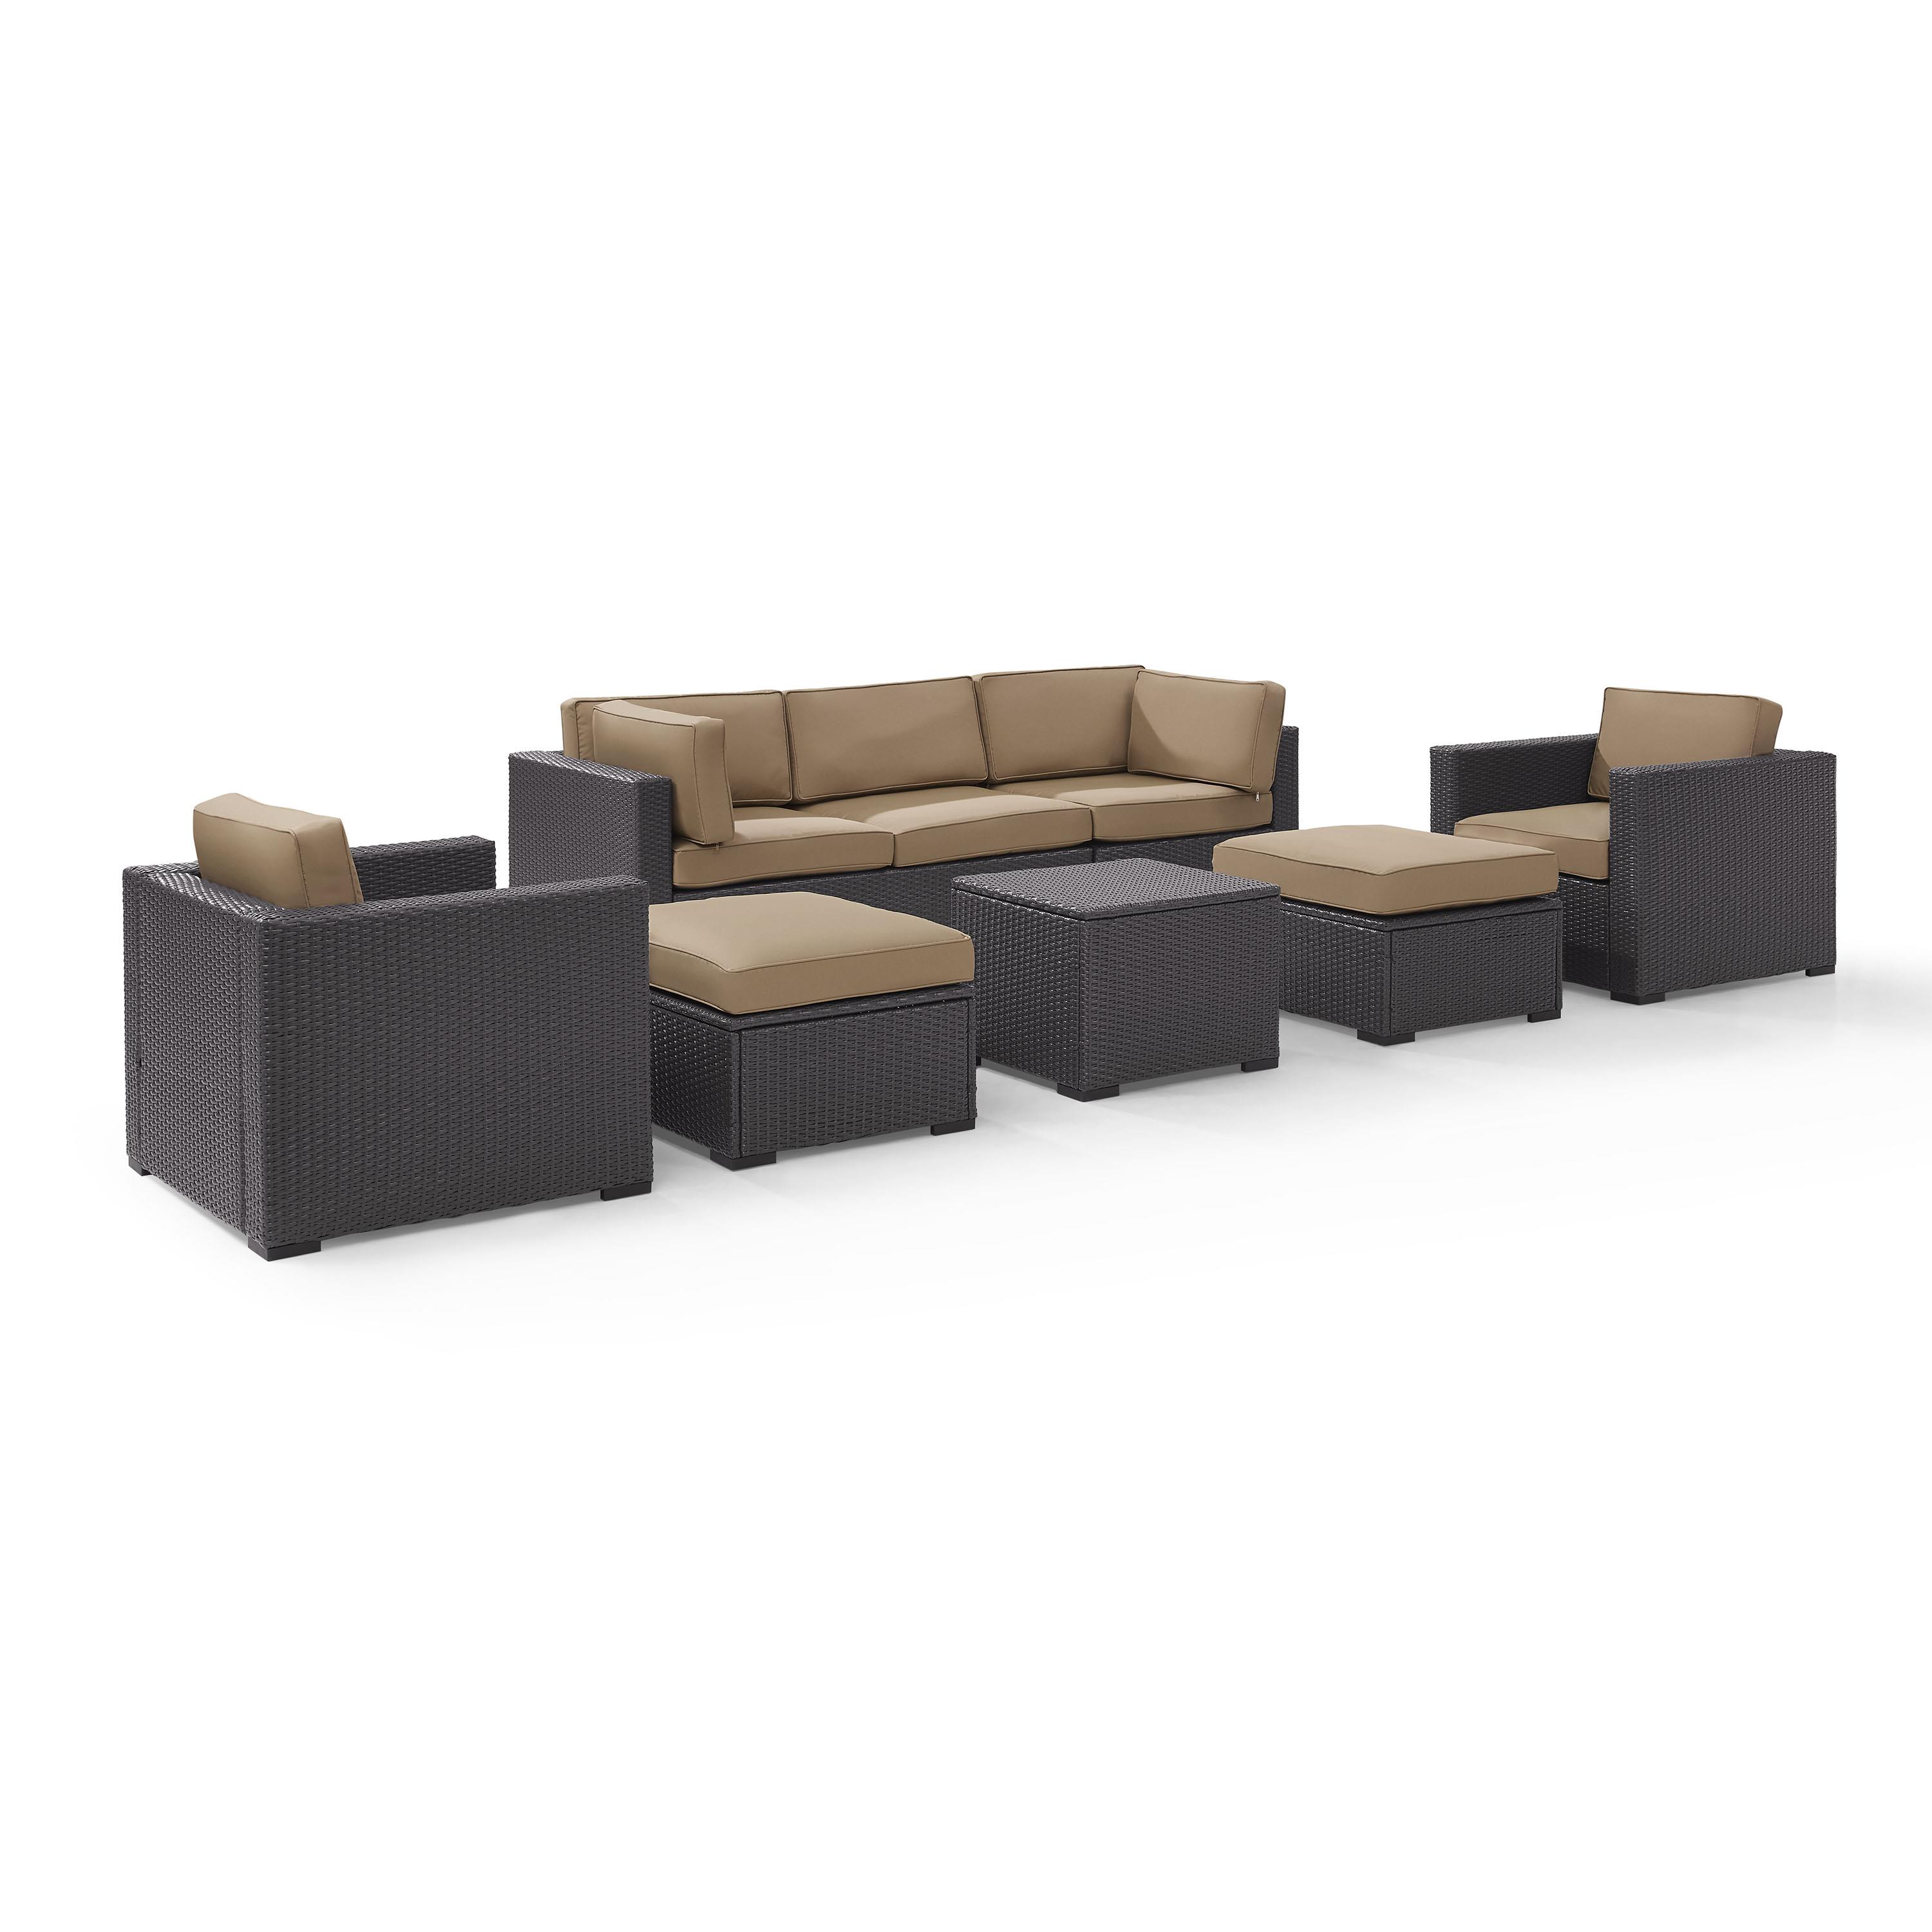 Crosley Furniture Biscayne 7 Piece Metal Patio Sofa Set in Brown/Mocha - image 2 of 4